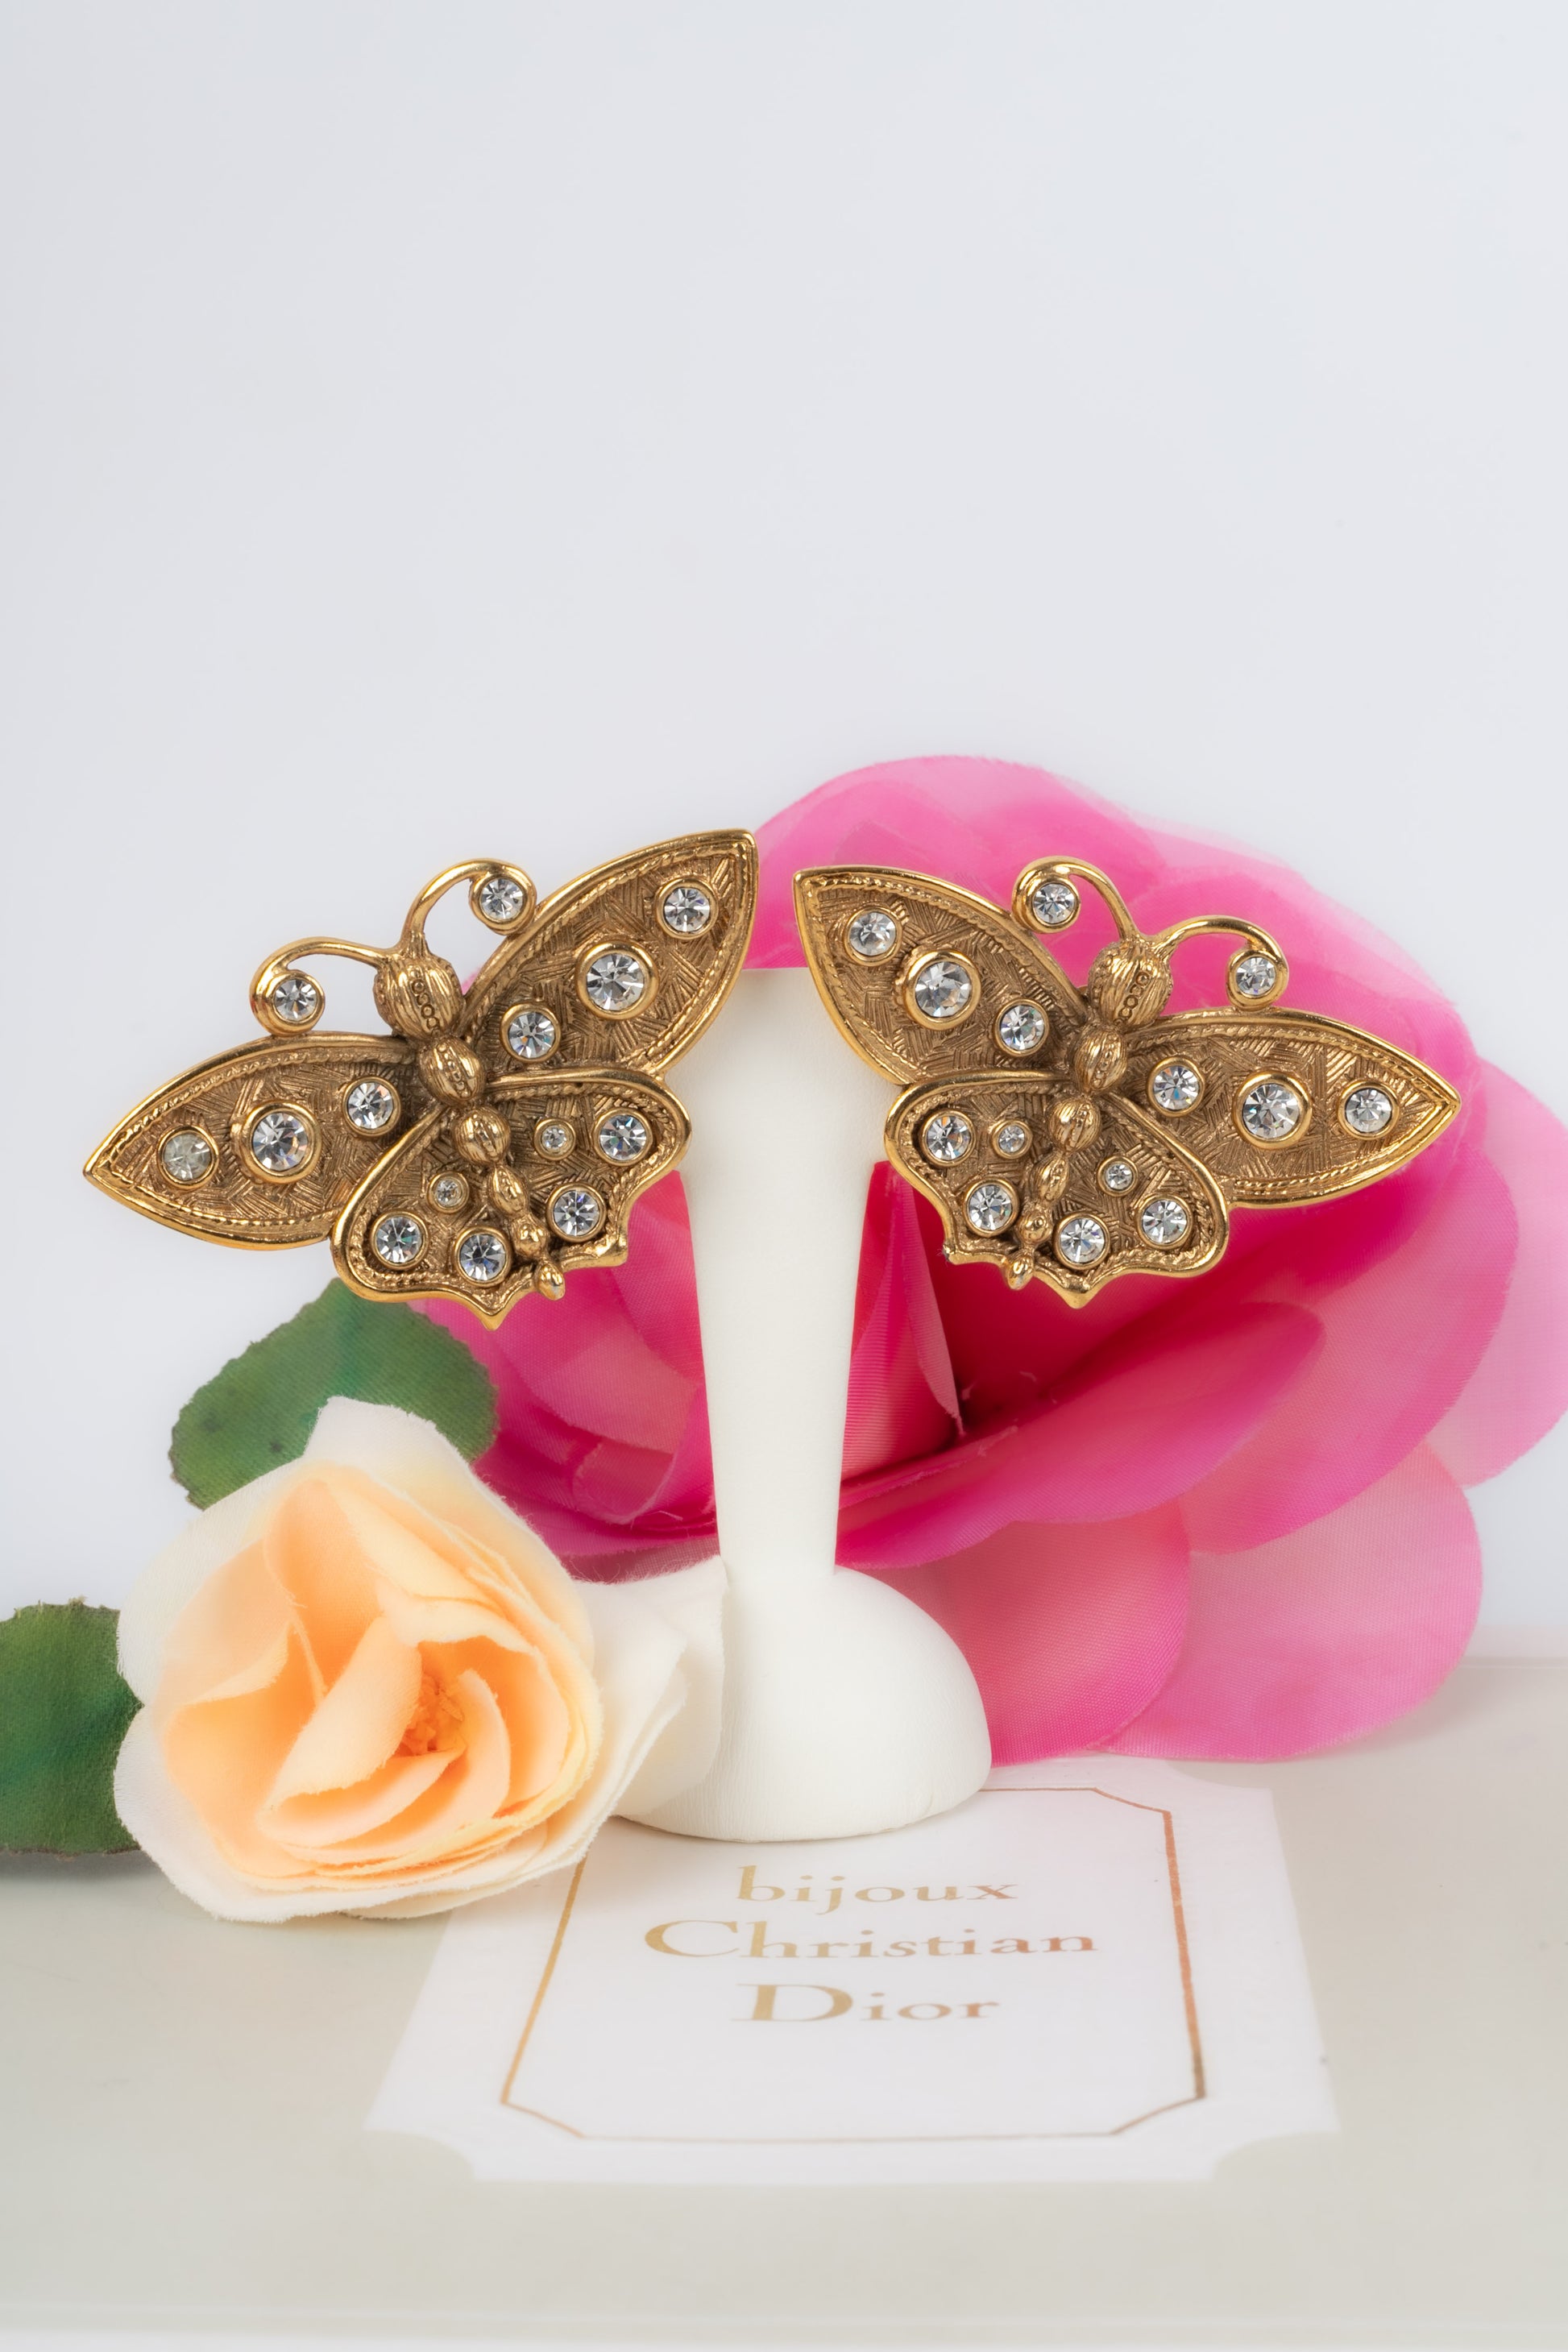 Boucles d'oreilles "Papillons" Christian Dior